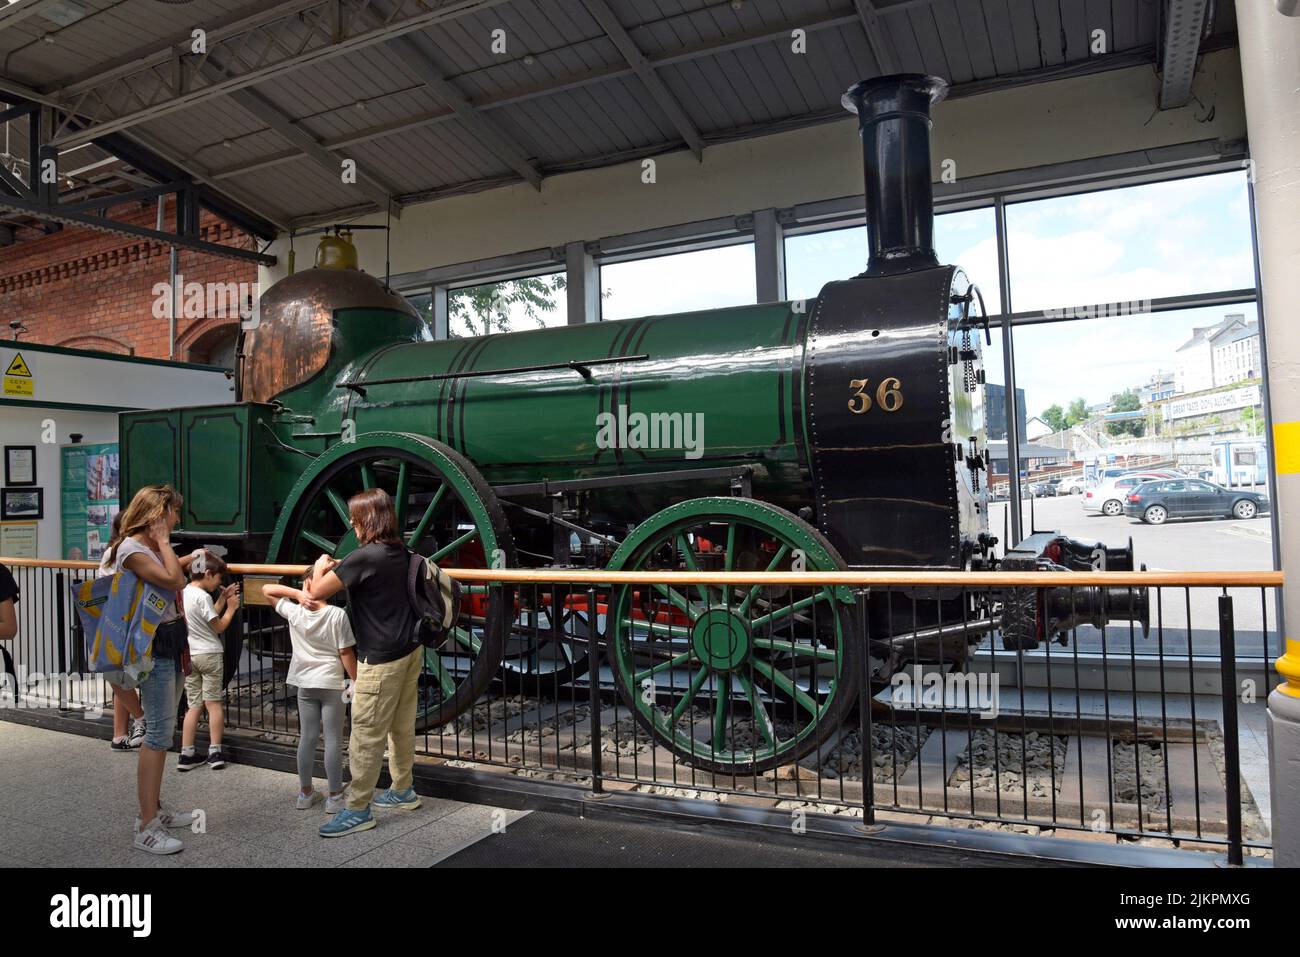 Locomotive number 36, an historic Irish Railways steam locomotive built in 1847, on display at Cork Kent Station, County Cork, Ireland Stock Photo